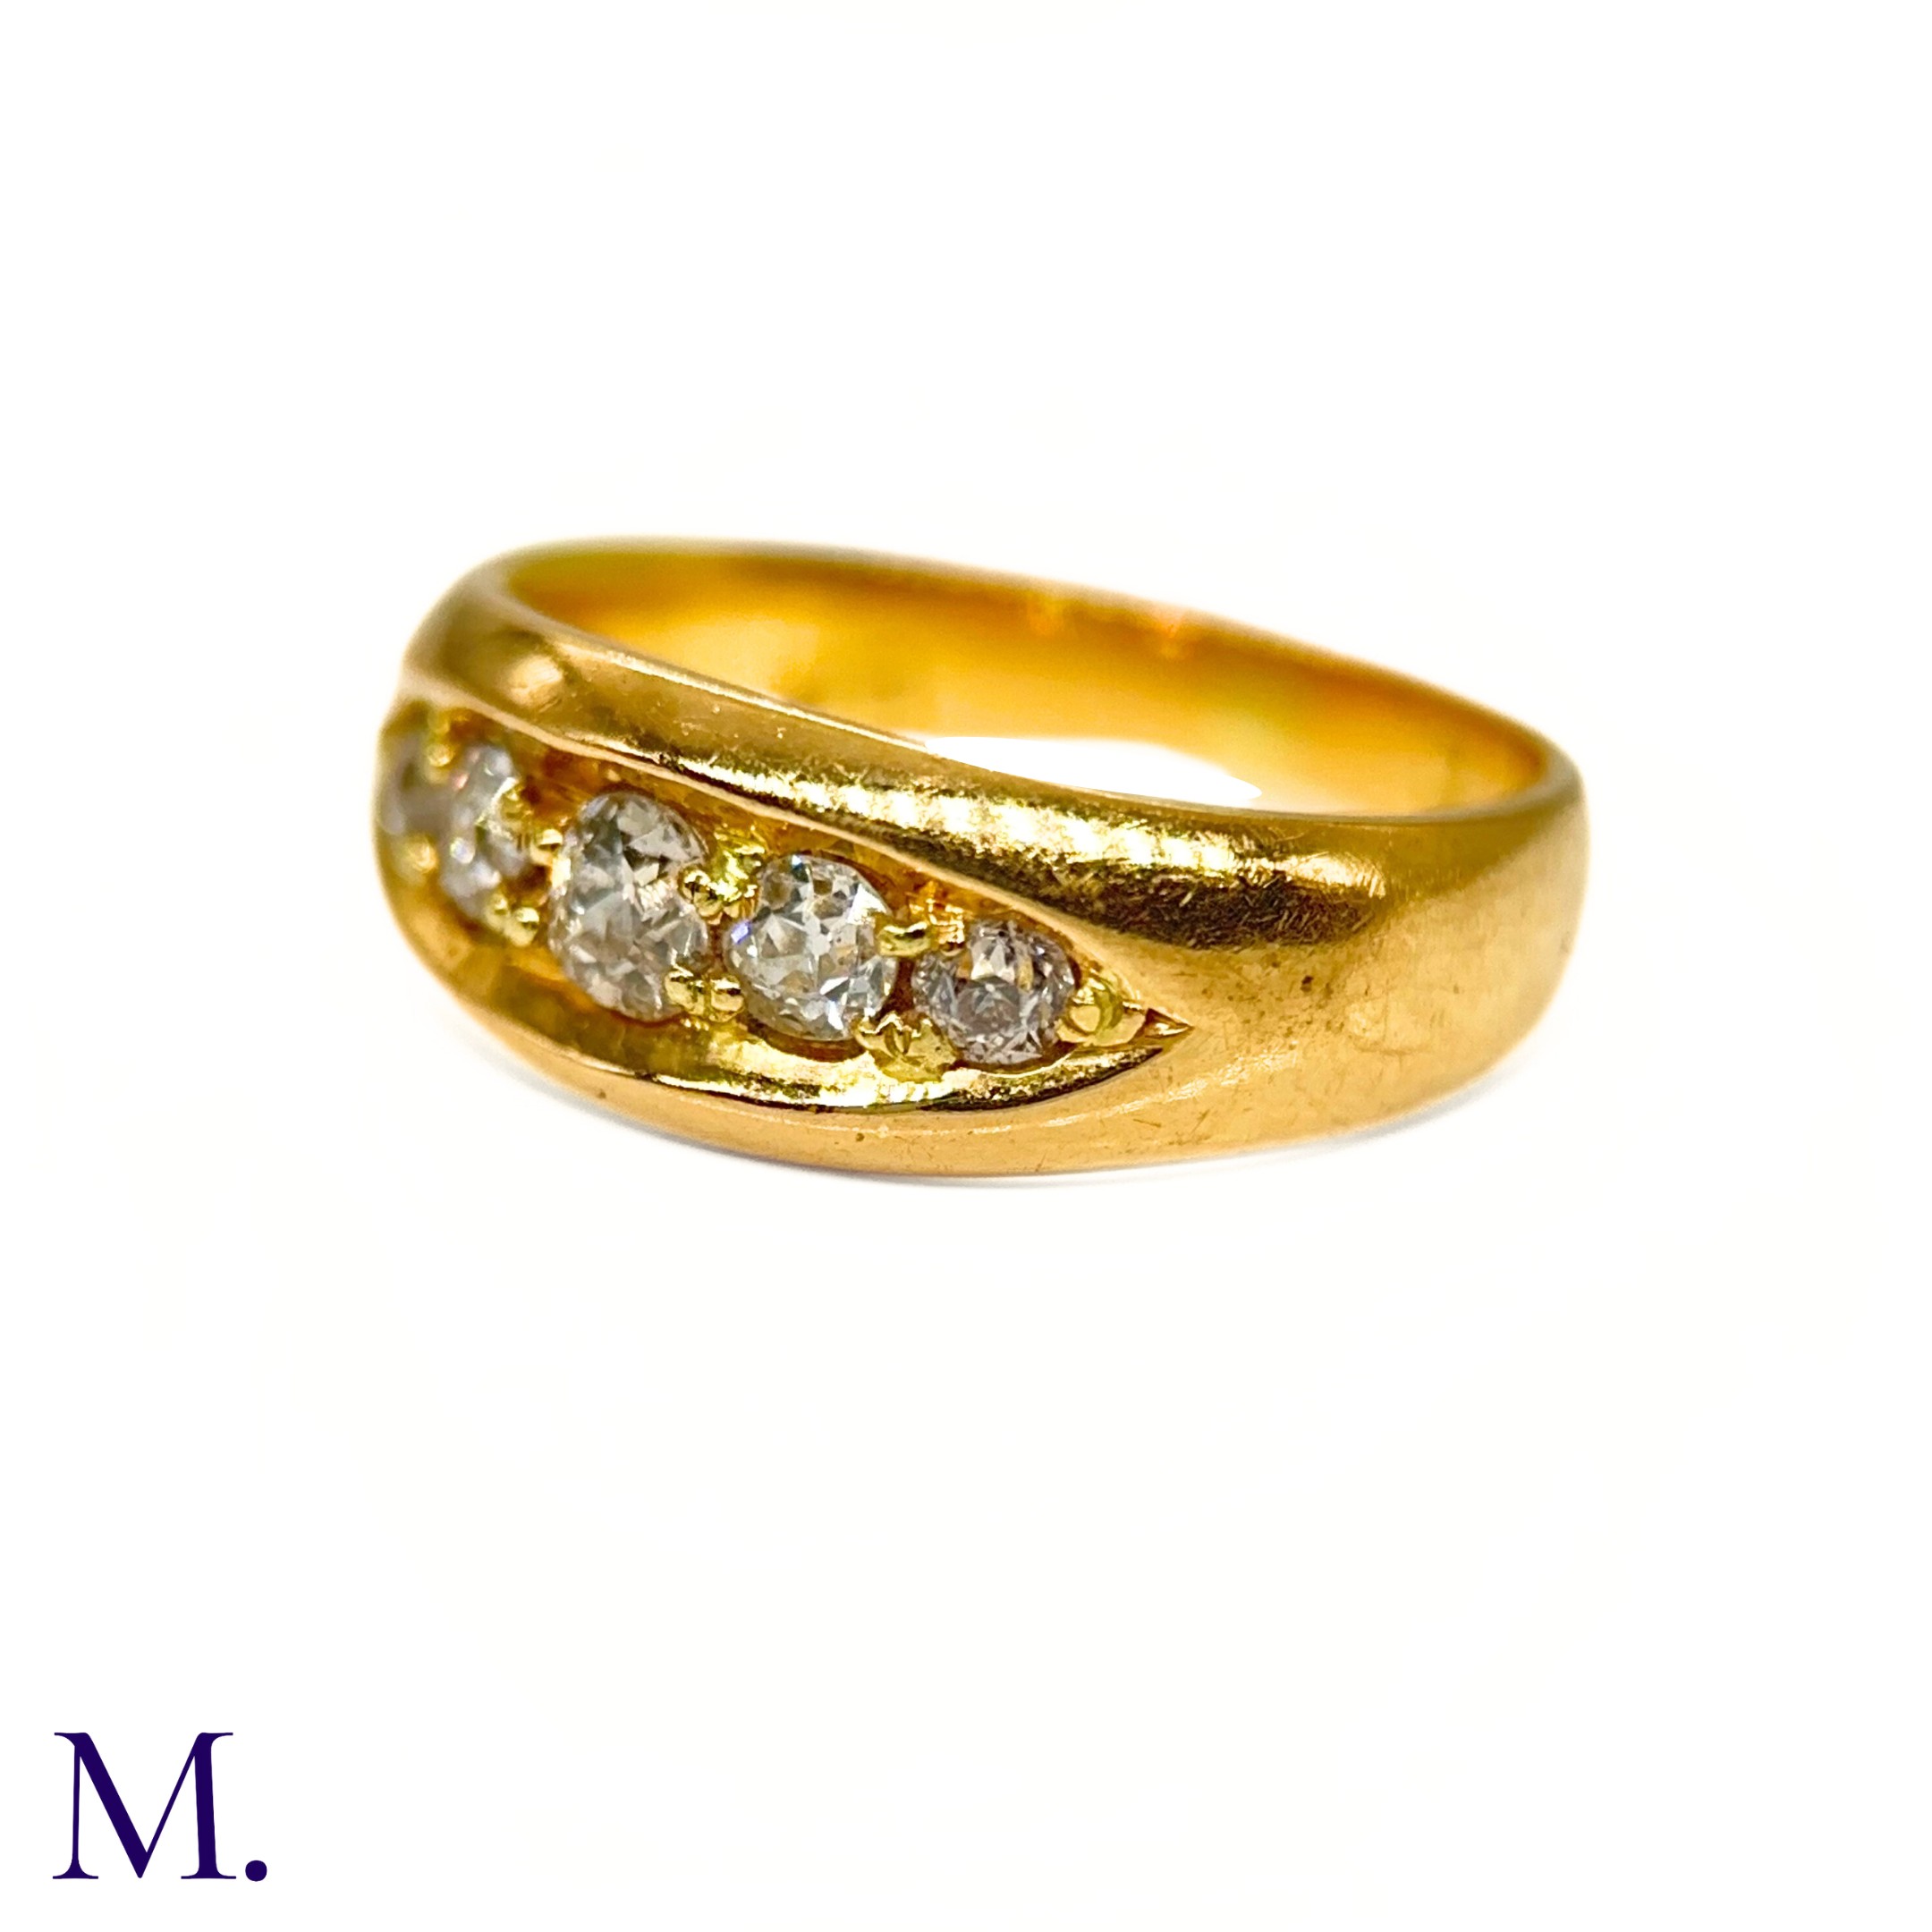 A 5-Stone Diamond Gypsy Ring - Image 3 of 5